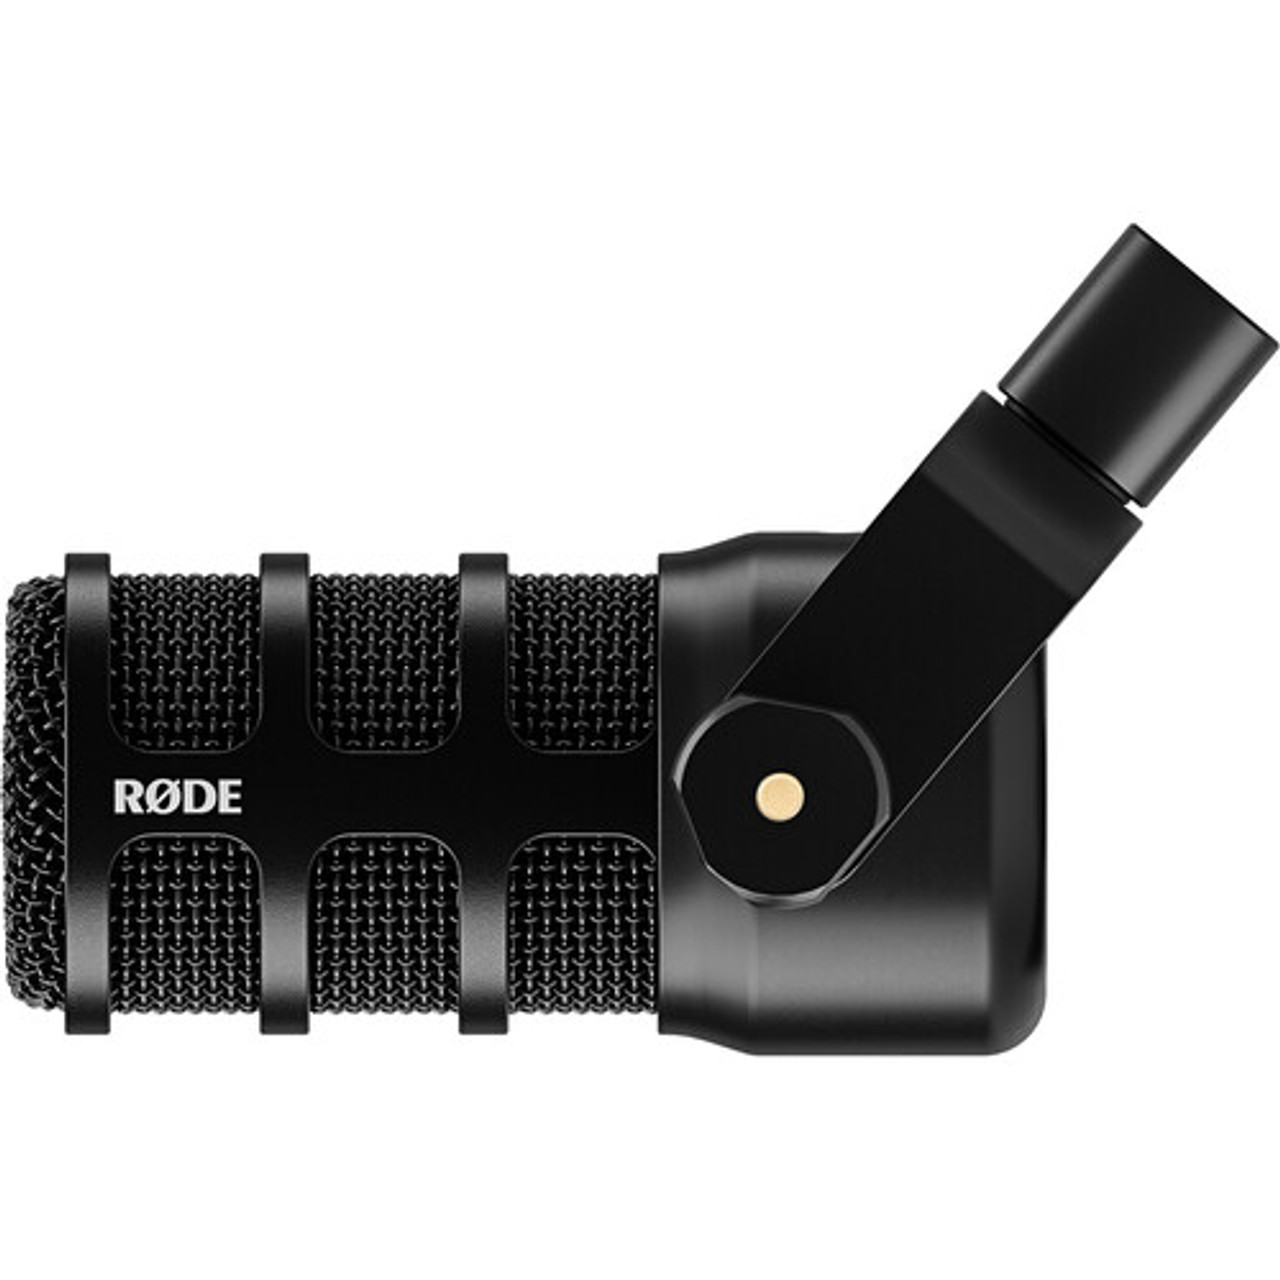 Rode Podmic USB vs Rode Podmic sound test and comparison 